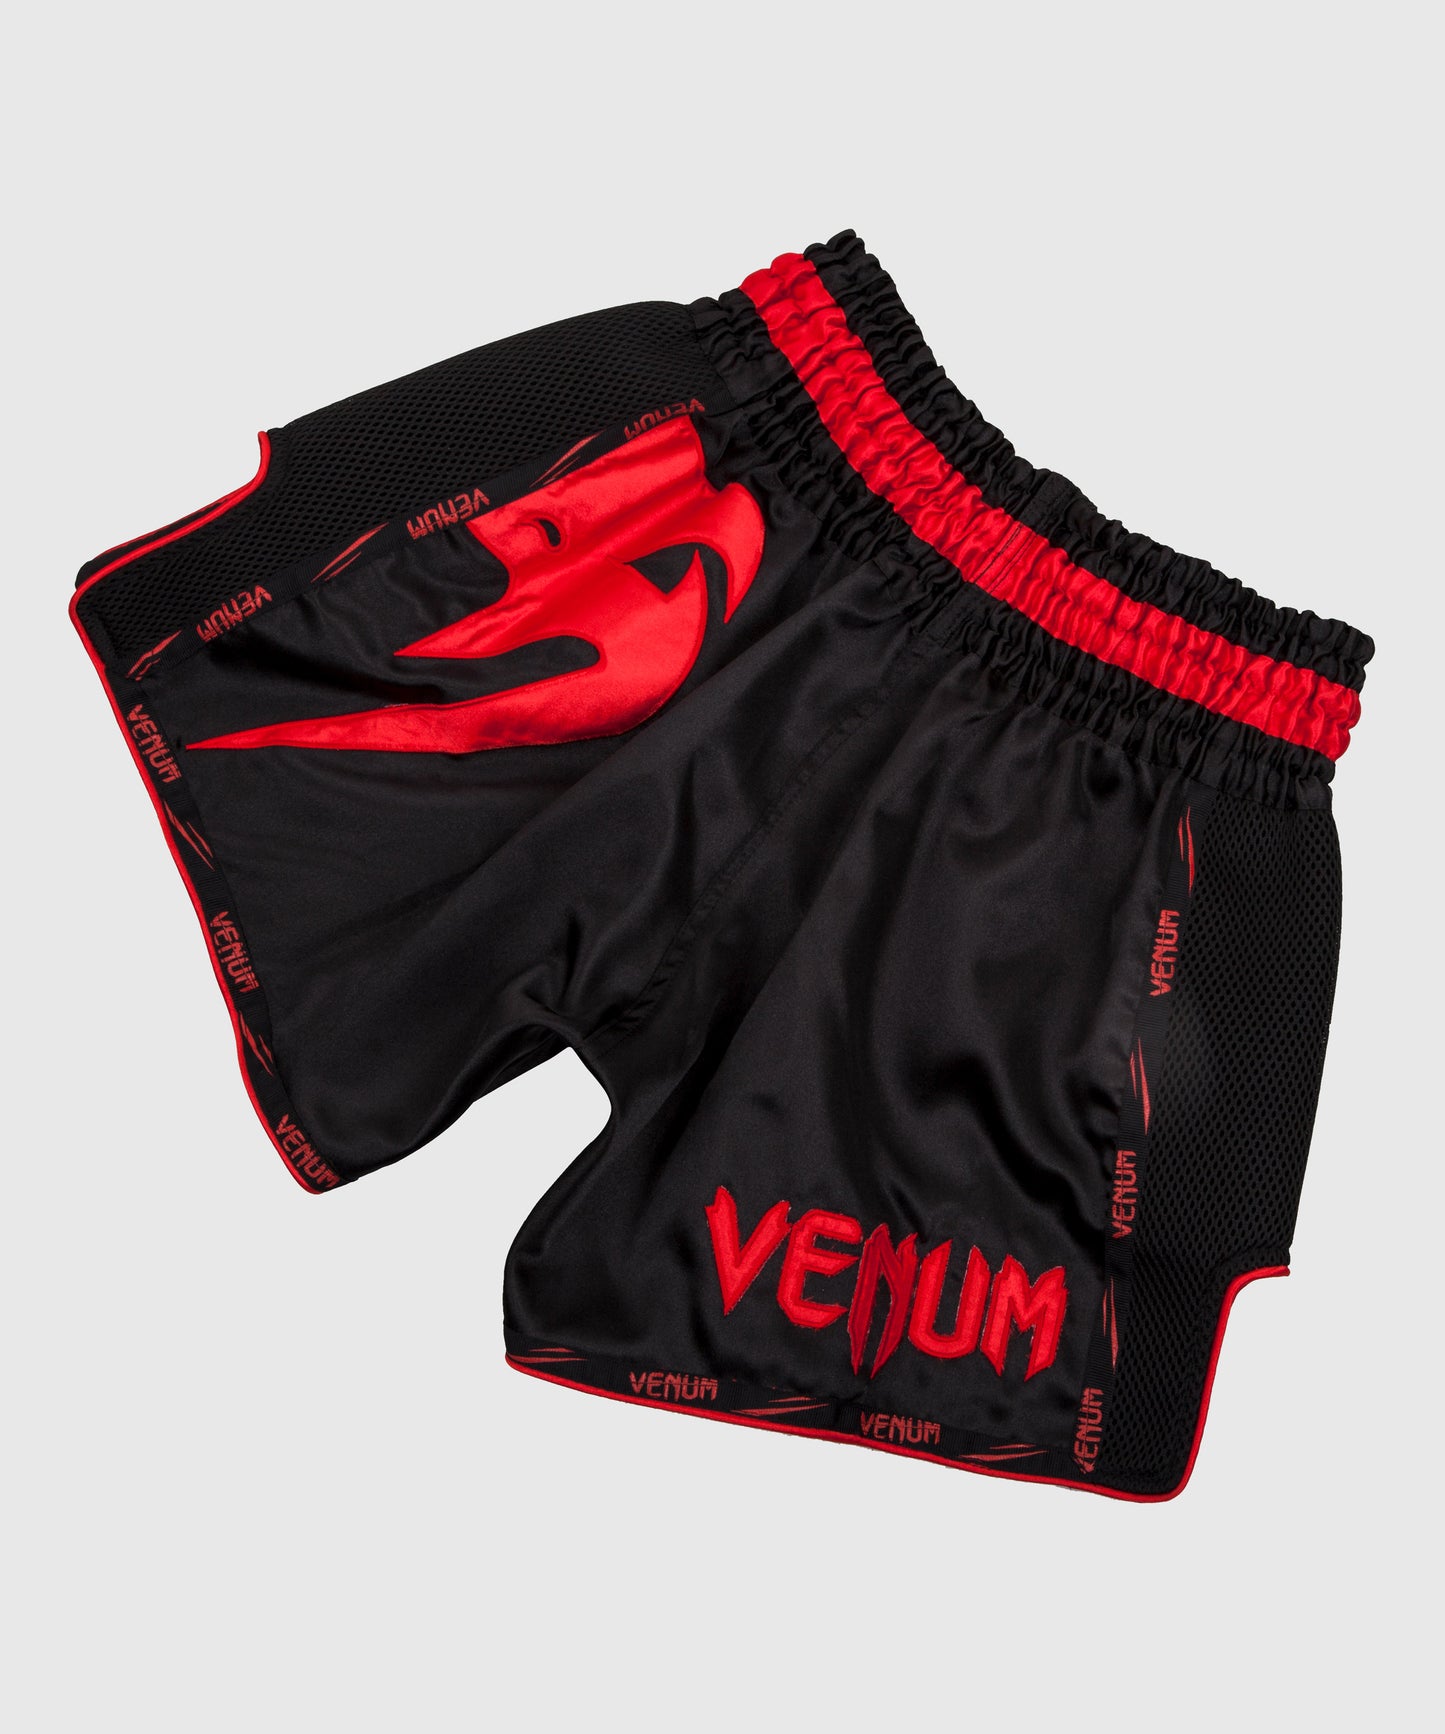 Pantalones Cortos de Muay Thai Venum Giant - Negro/Rojo